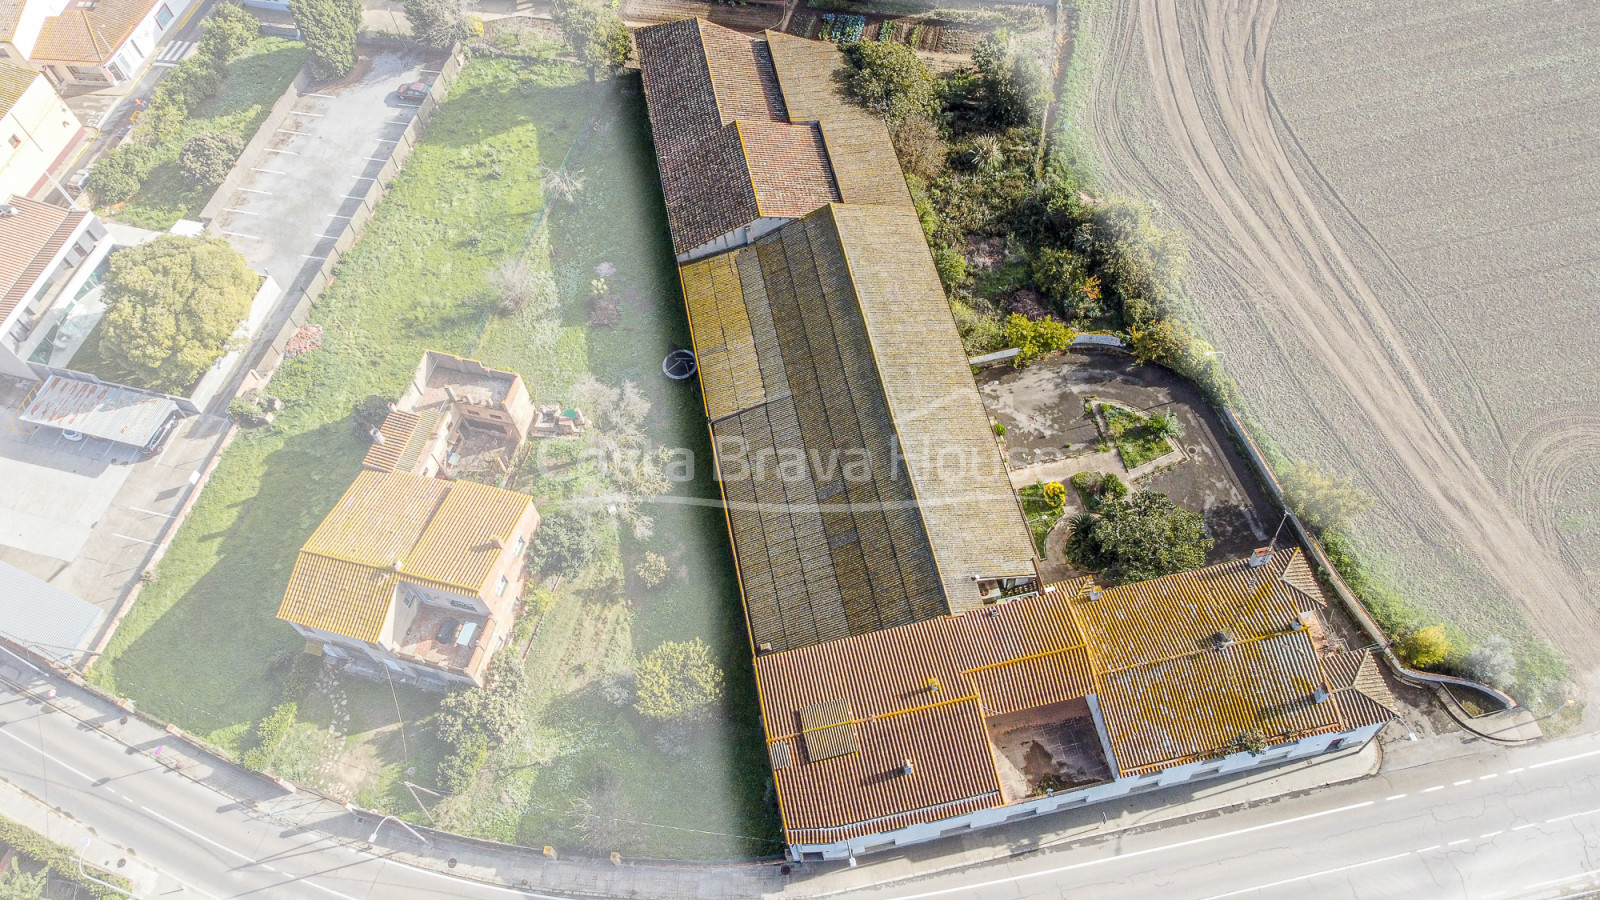 Building plot in Pals, Costa Brava